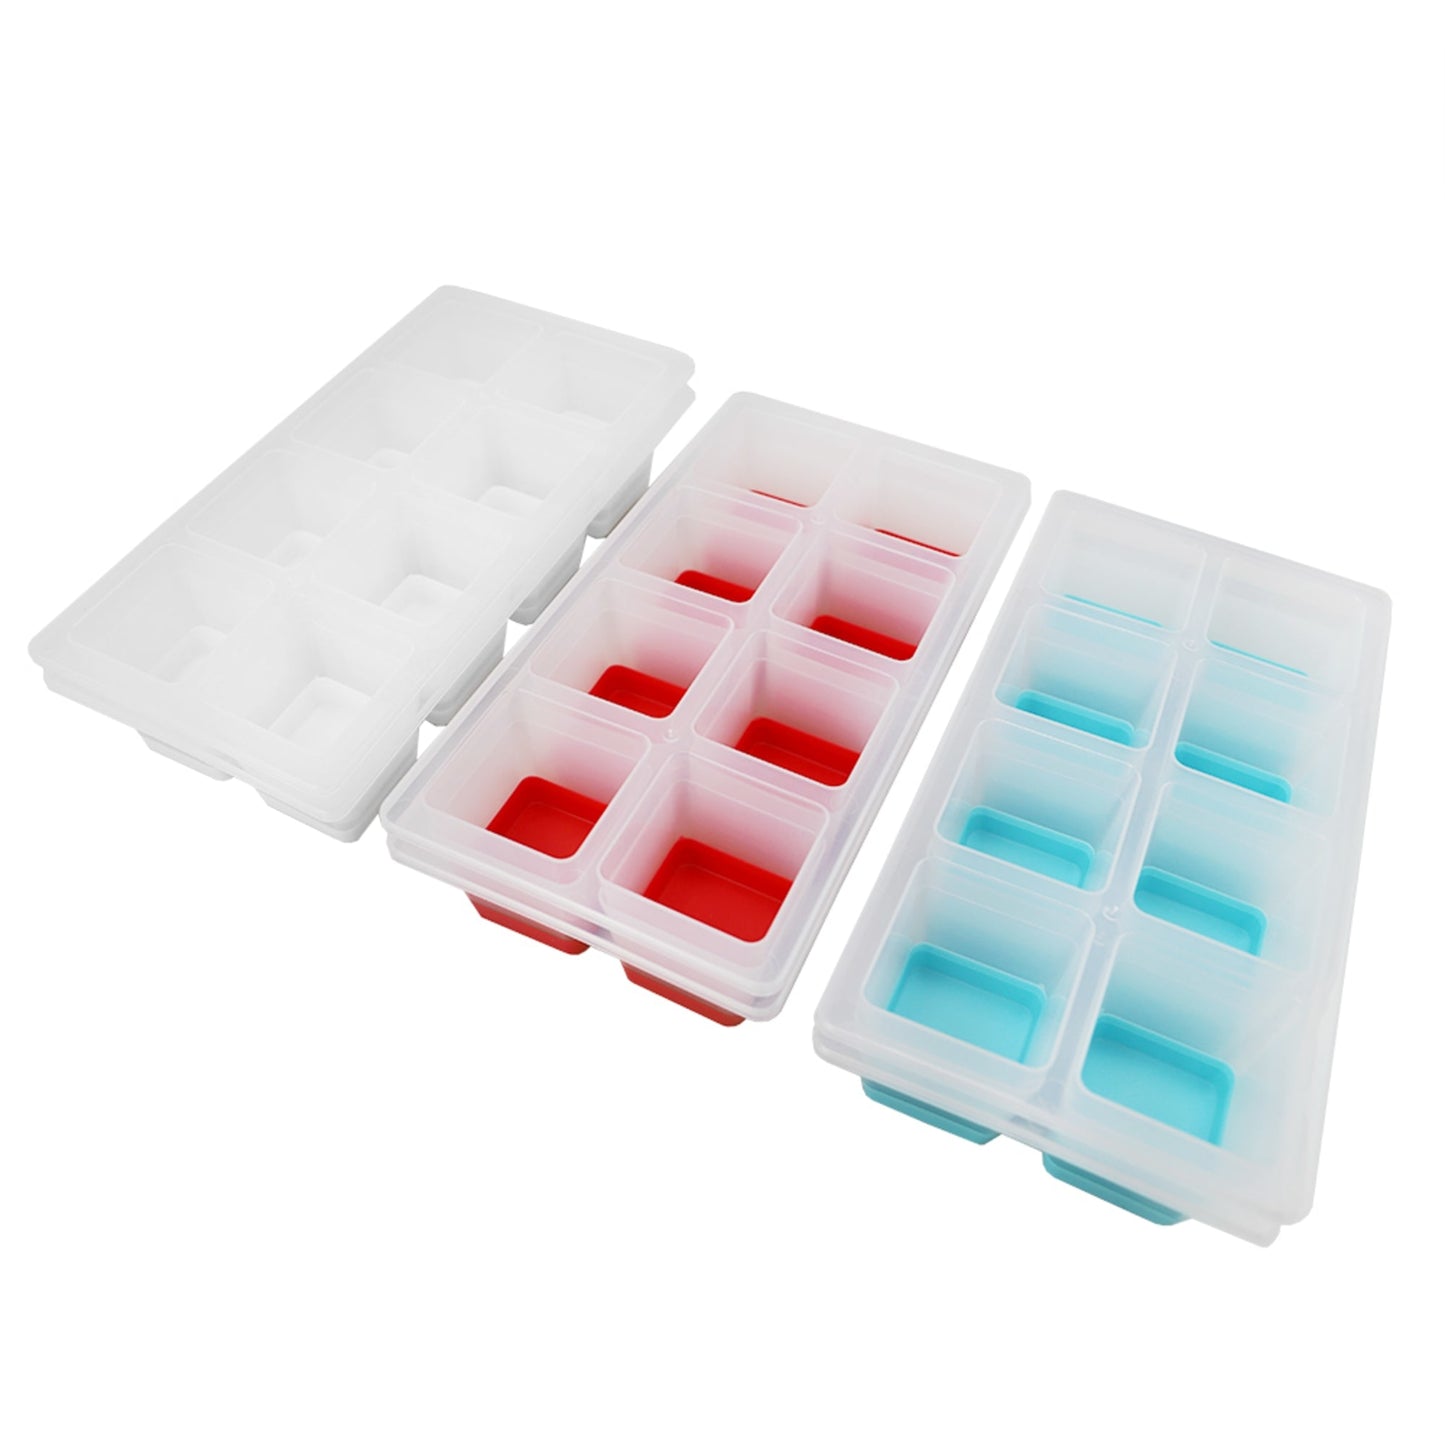 6 Compartment Ice Cube Trays - ApolloBox